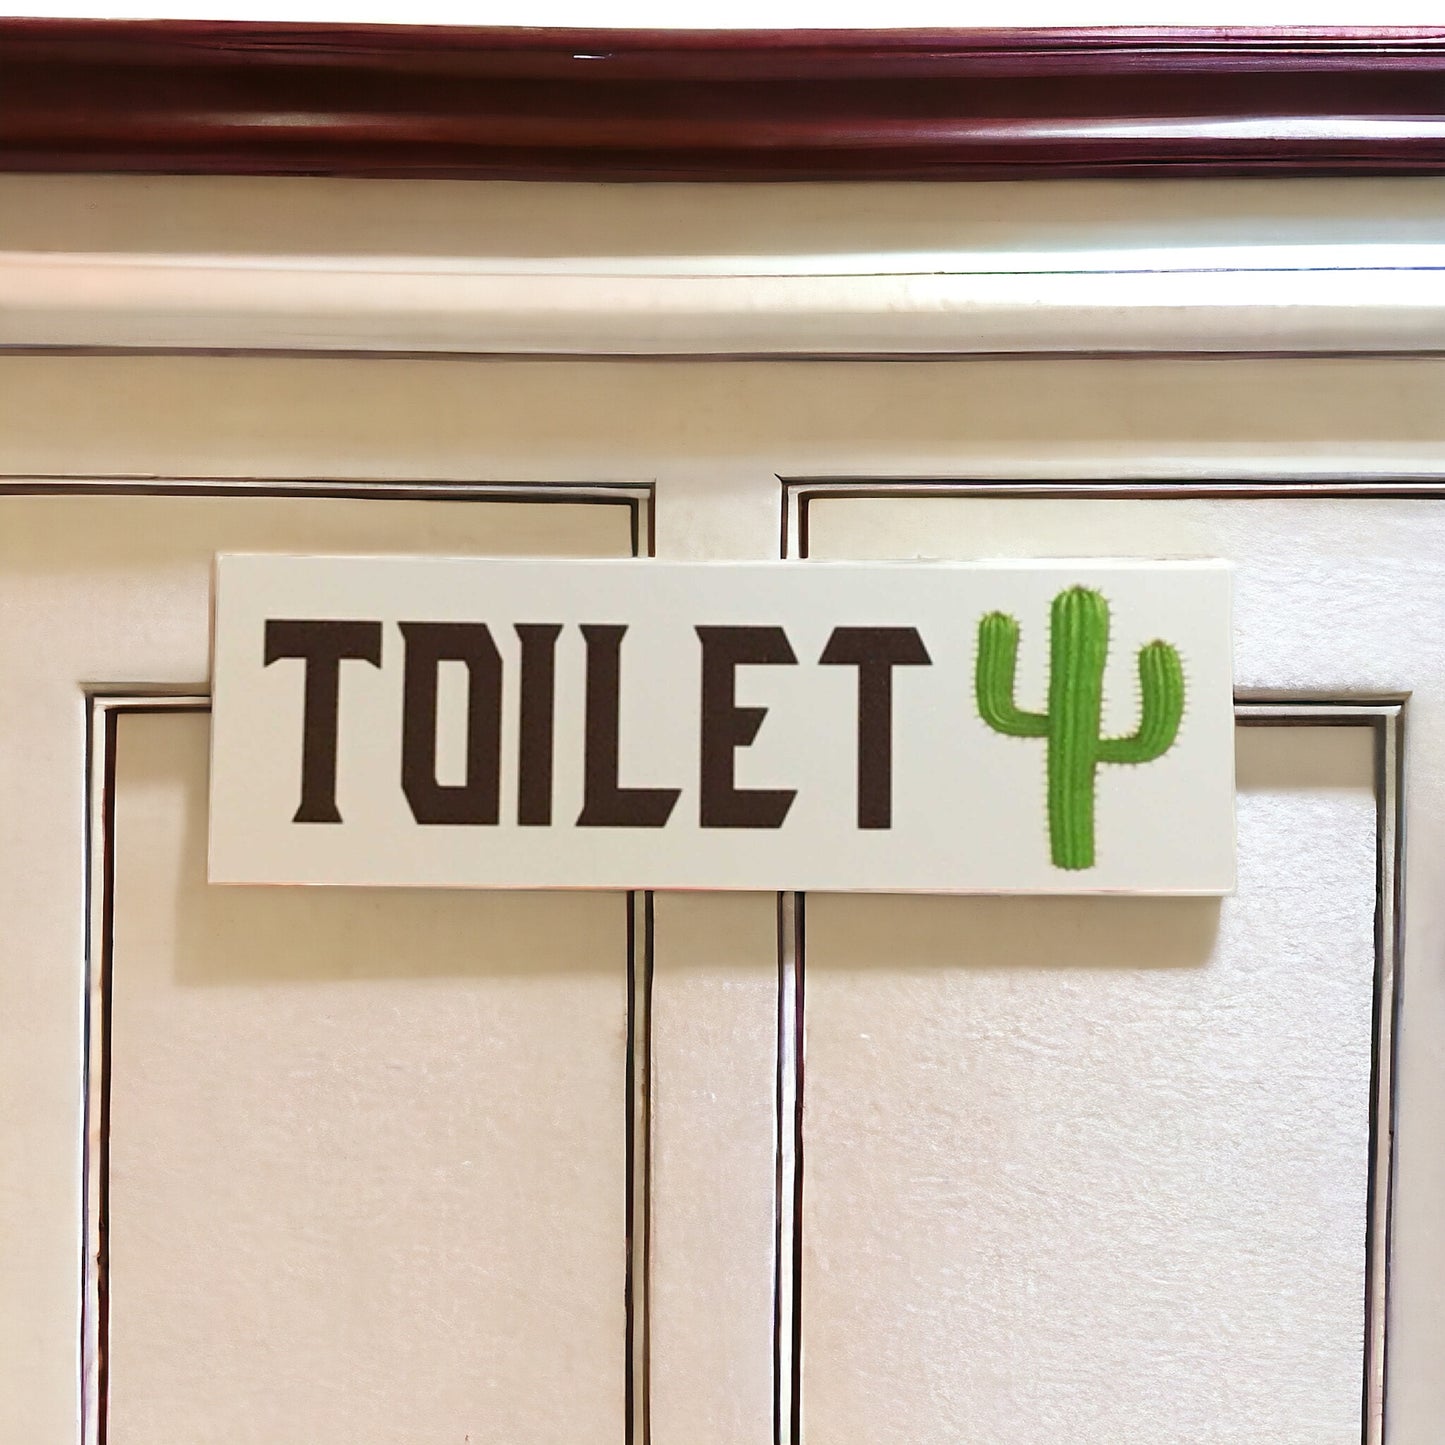 Cactus Toilet Laundry Bathroom Door Sign - The Renmy Store Homewares & Gifts 